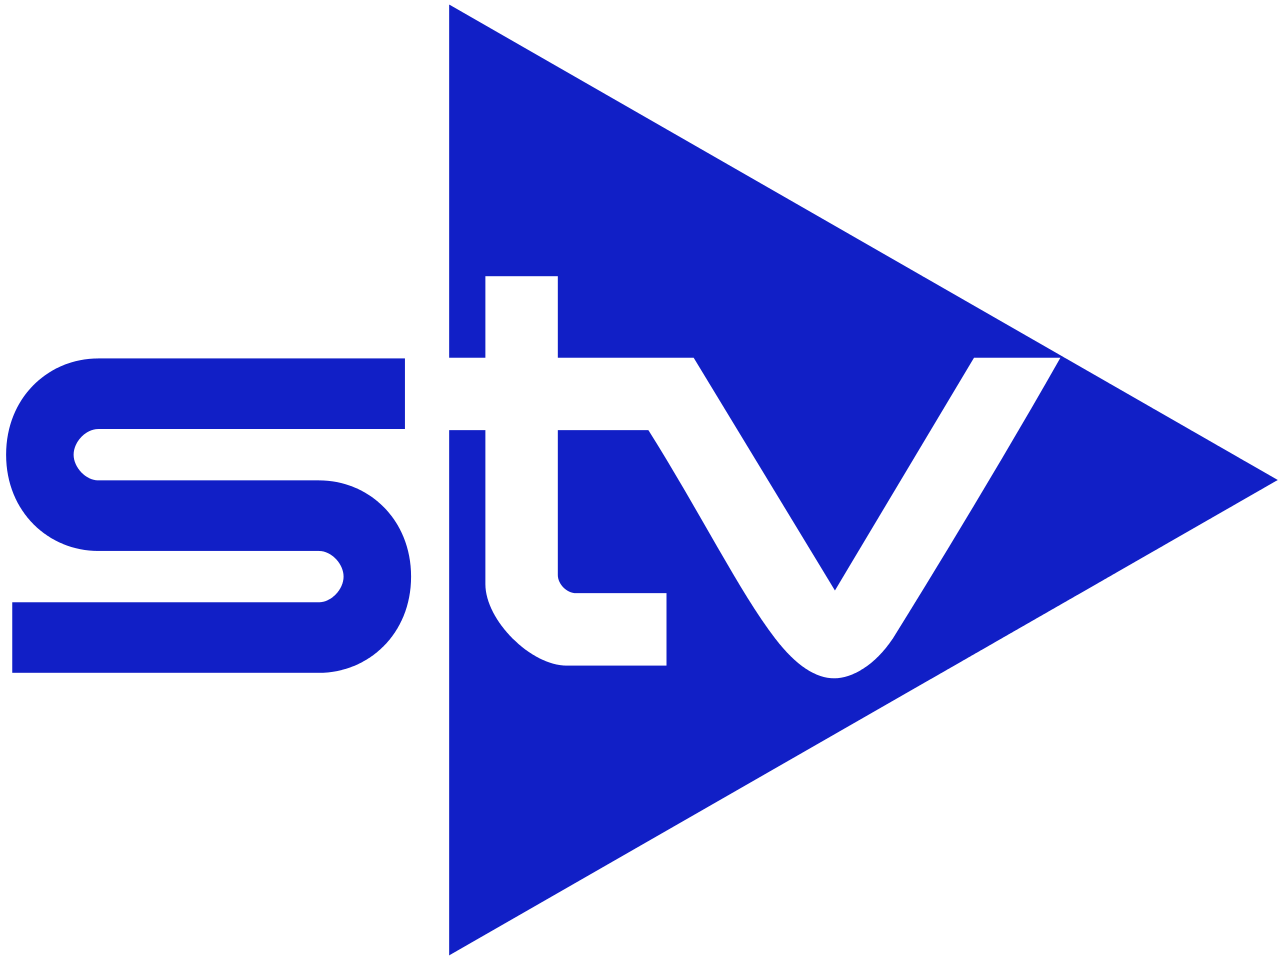 STV Logo - File:STV logo.svg